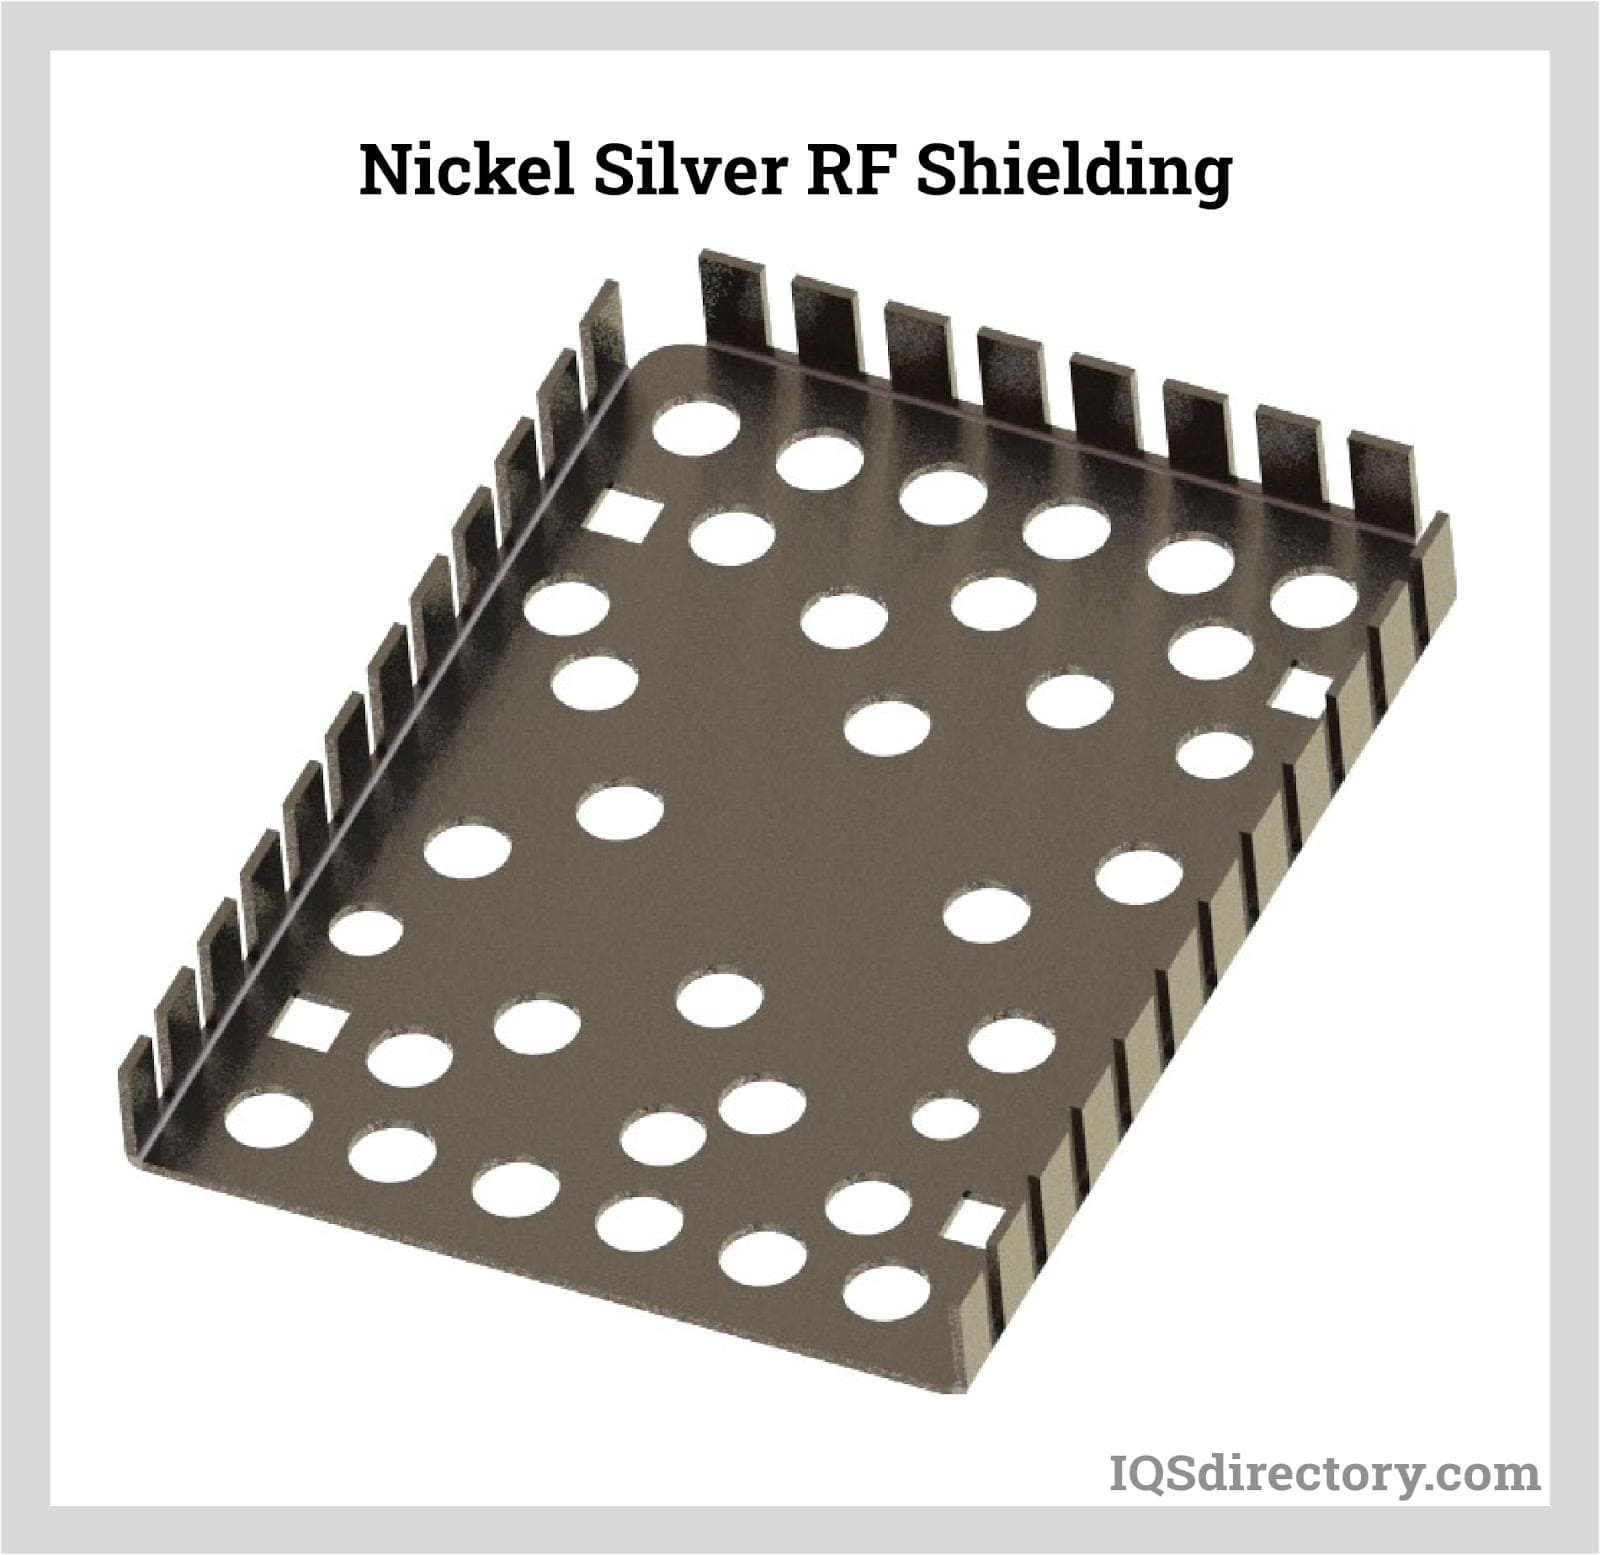 Nickel Silver RF Shielding